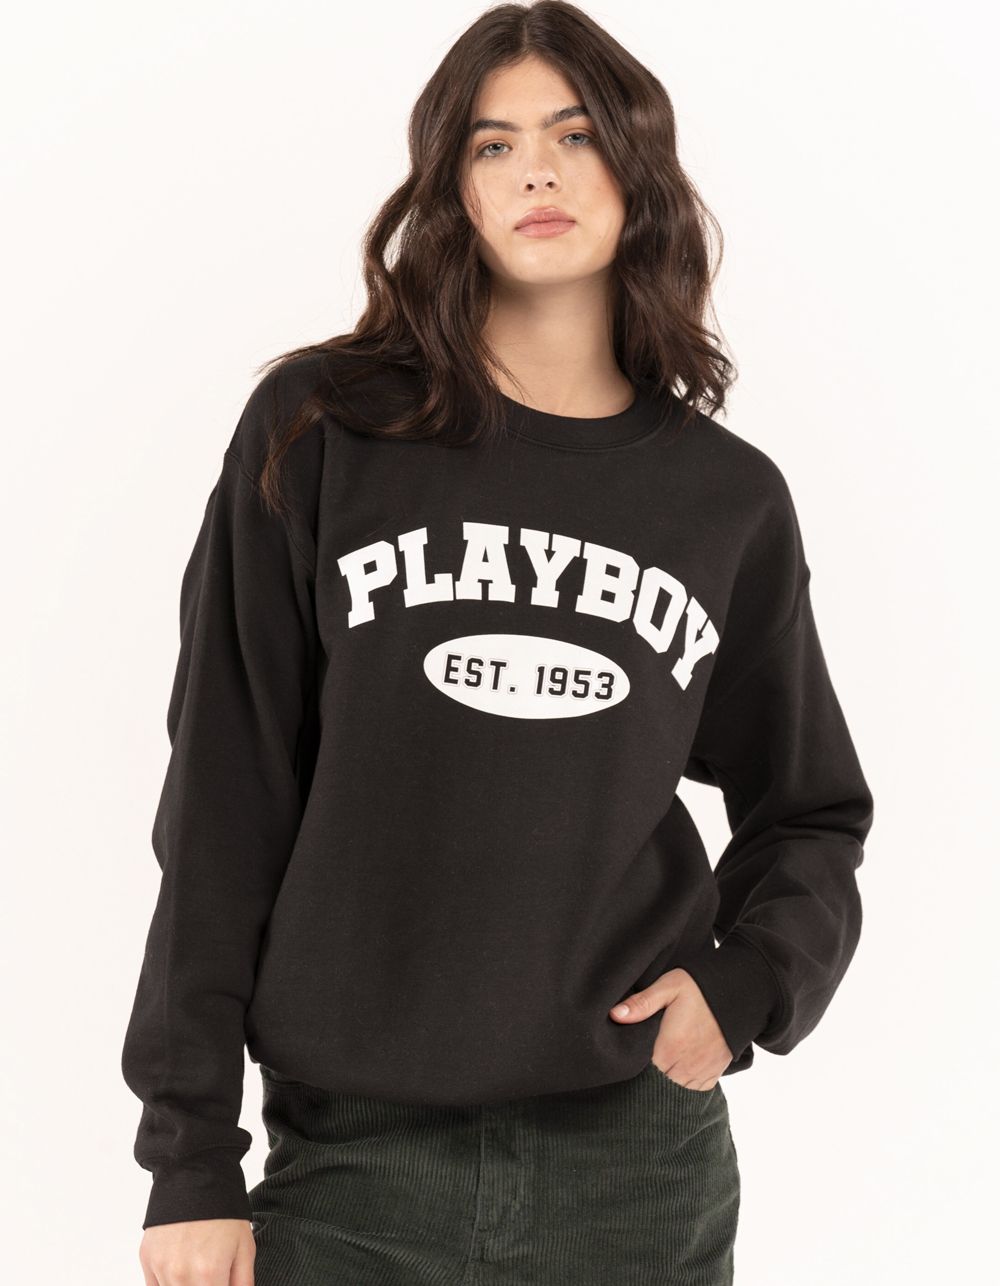 PLAYBOY Est. 1953 Womens Crewneck Sweatshirt | Tillys